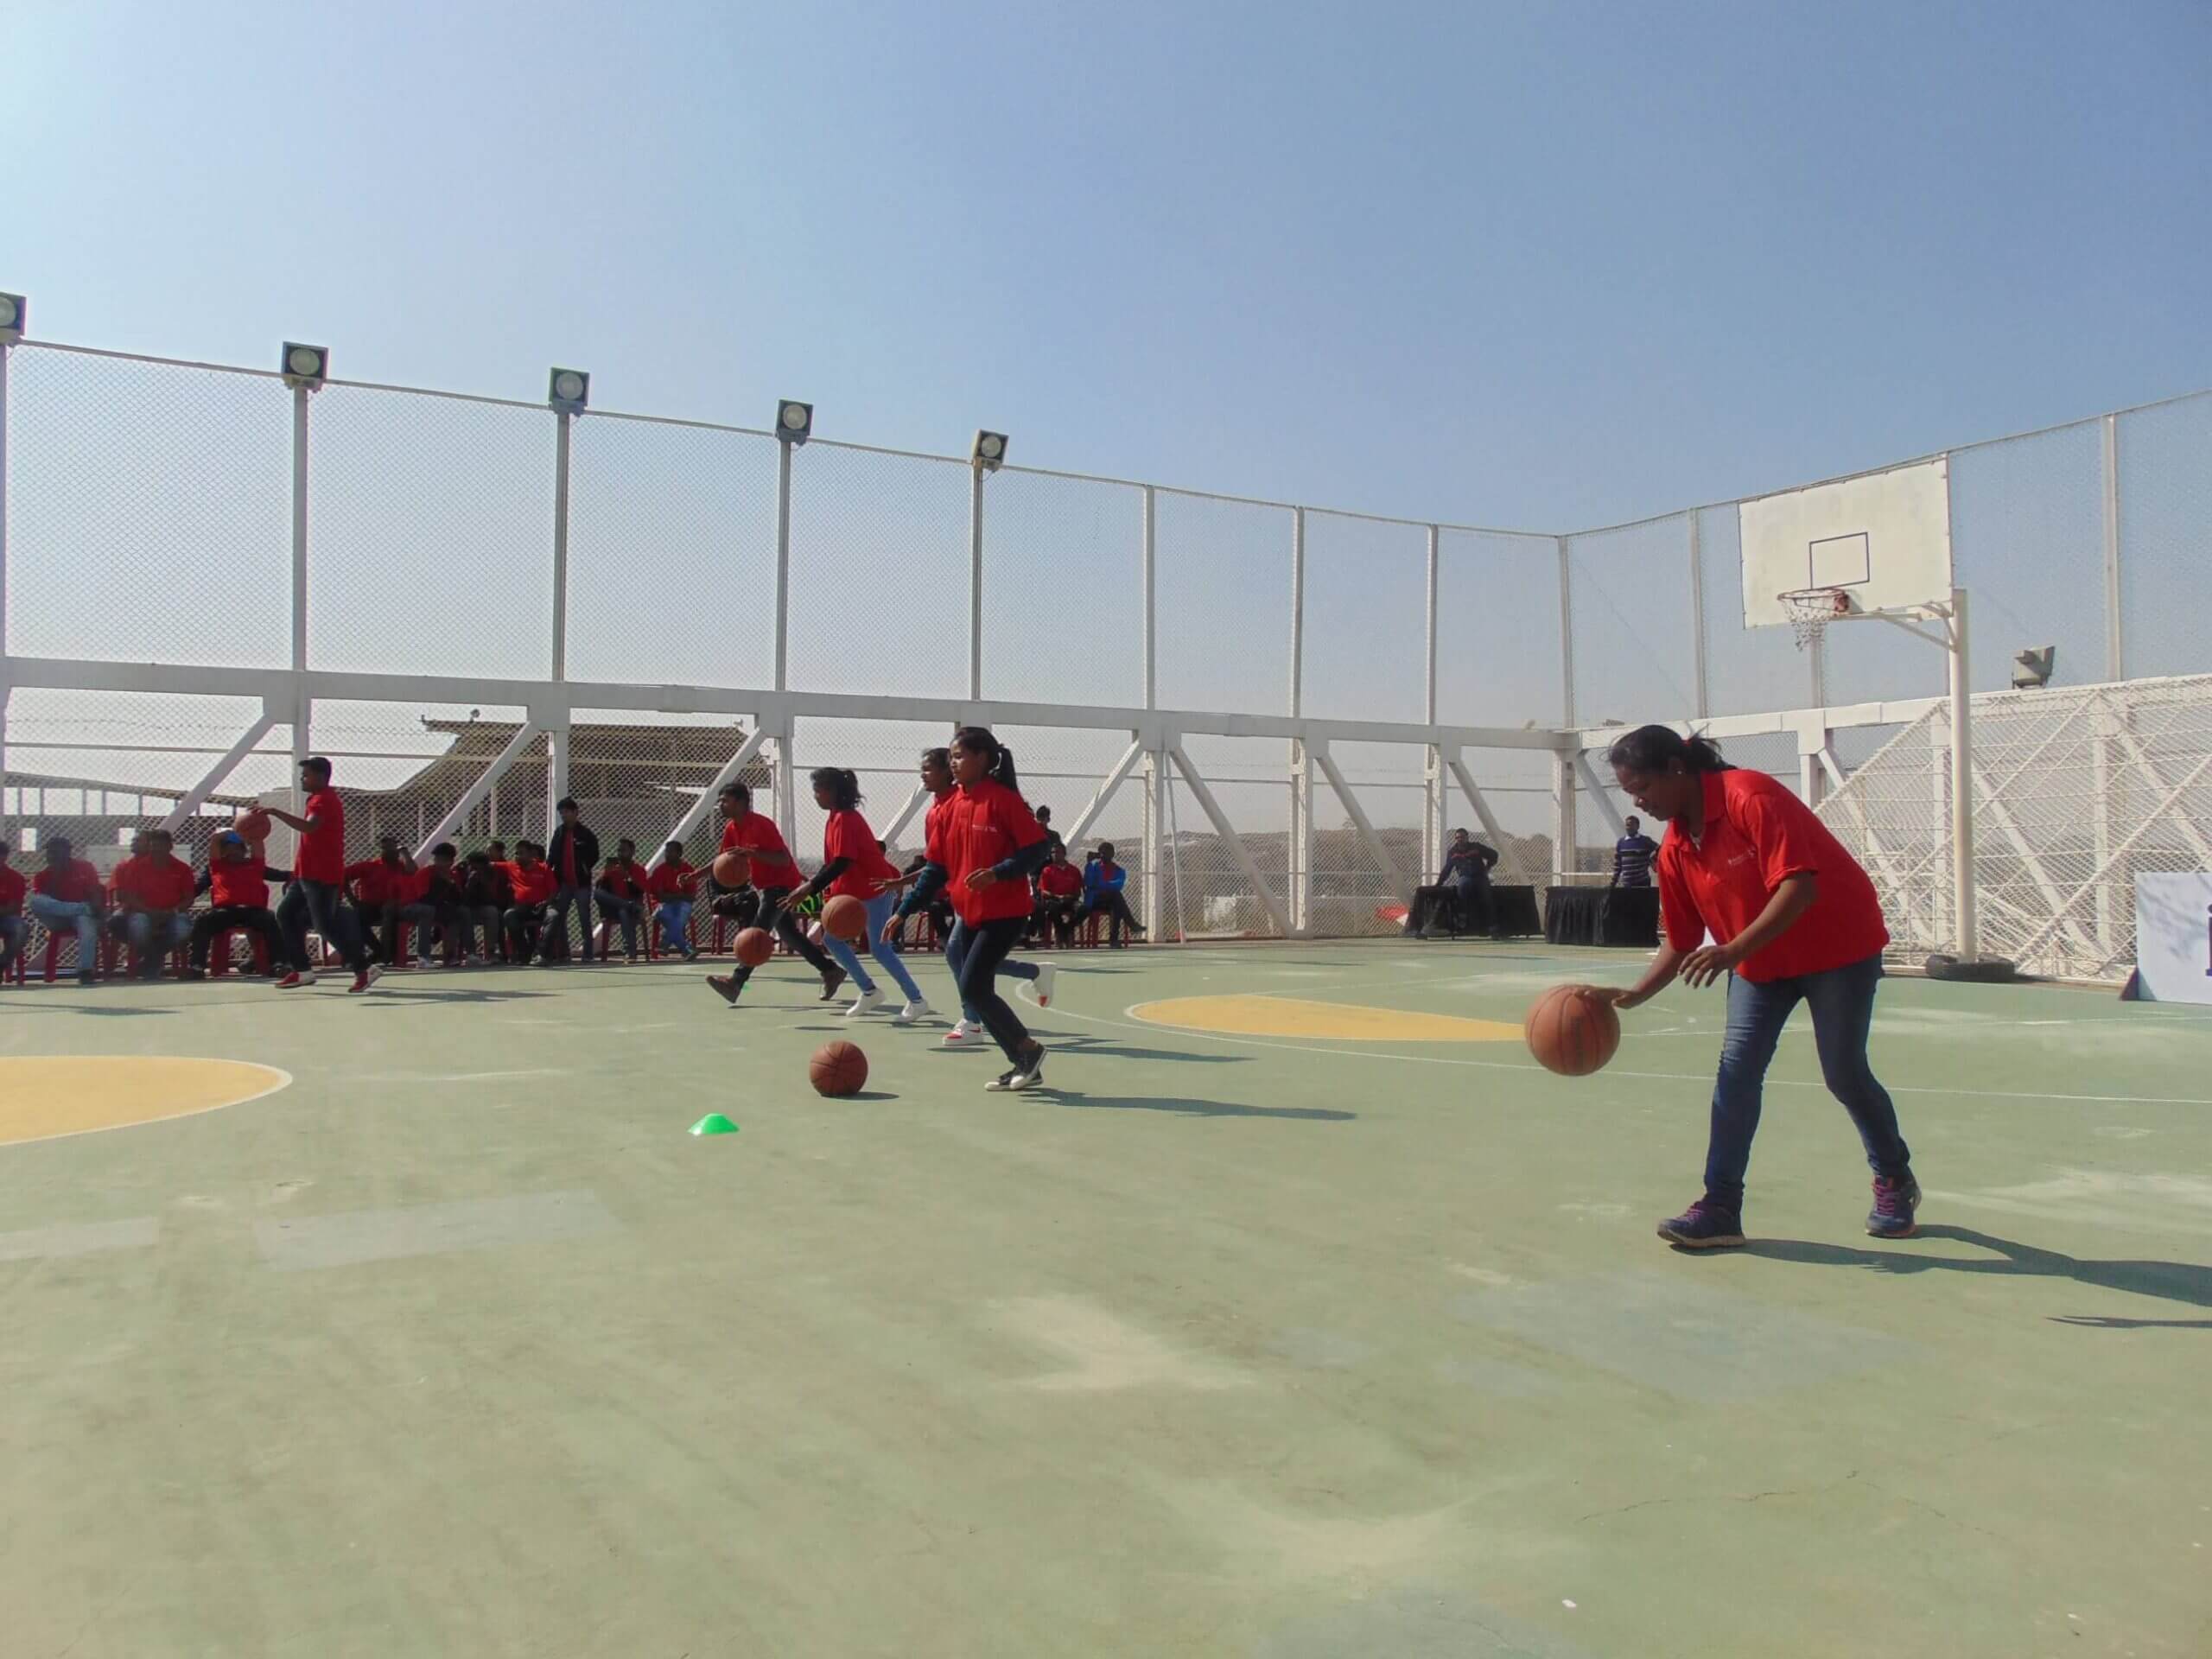 Jr. NBA organizes Coaching Clinic at Taurian World School